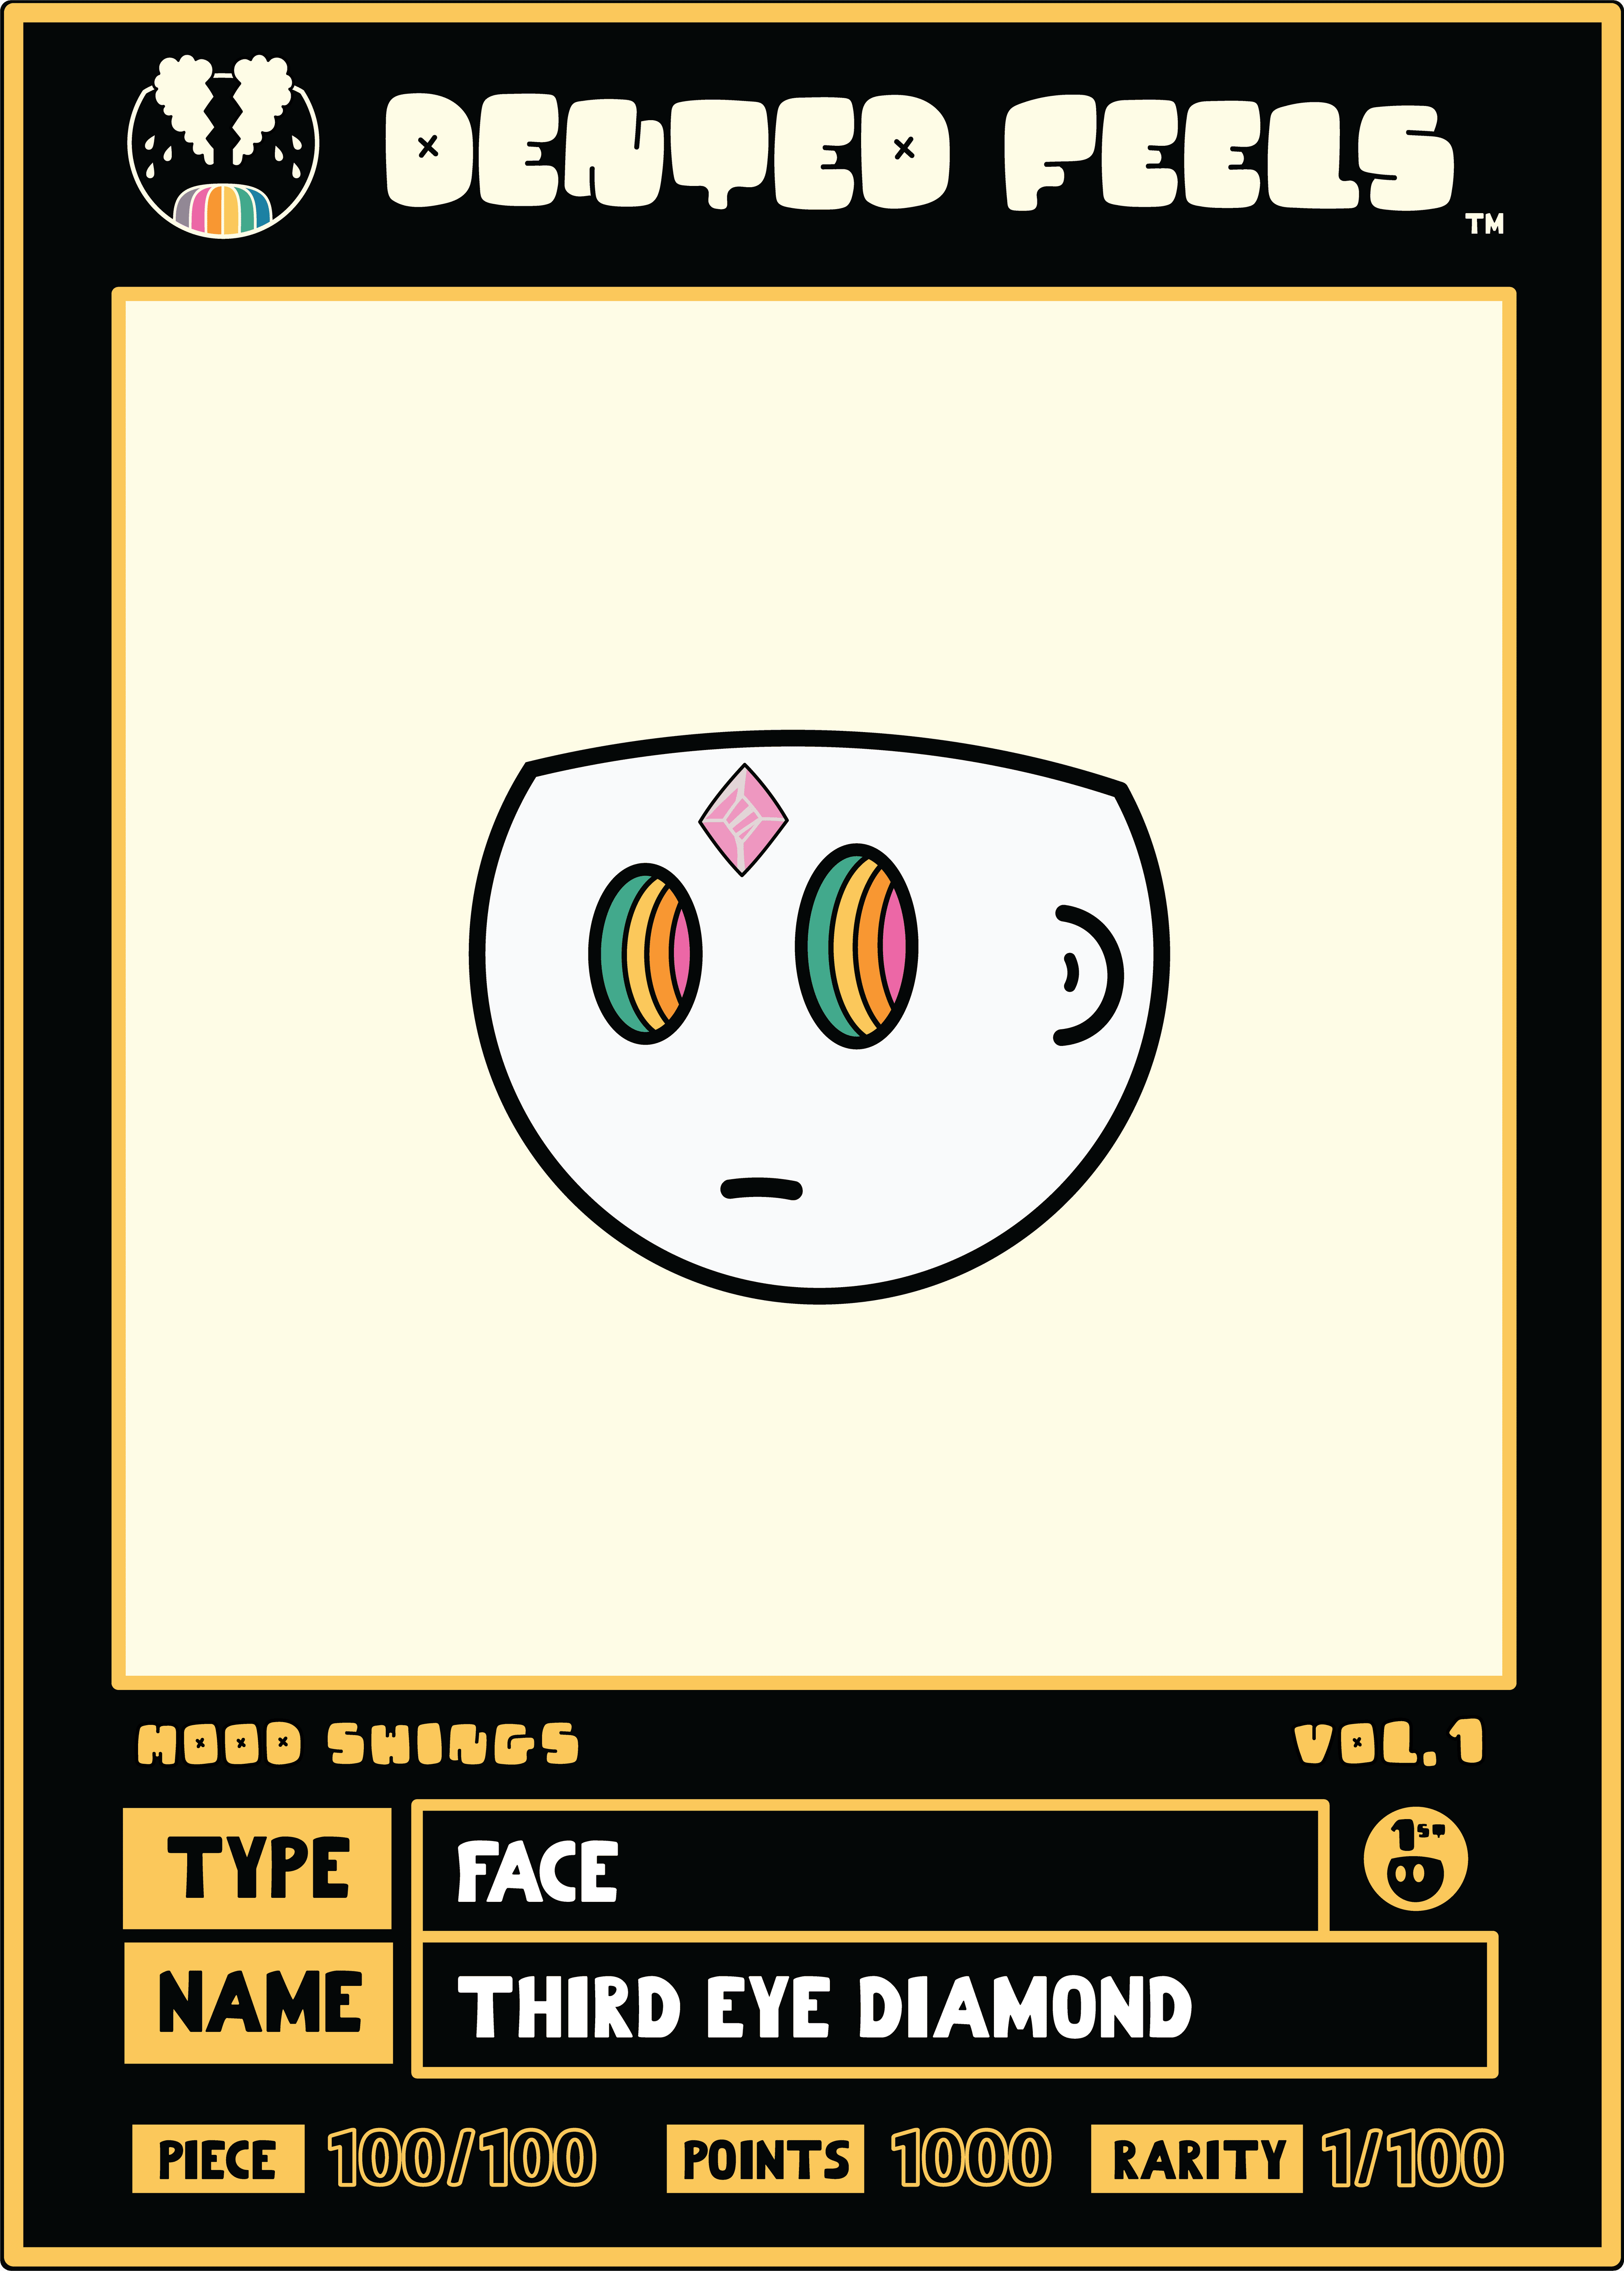 Third Eye Diamond